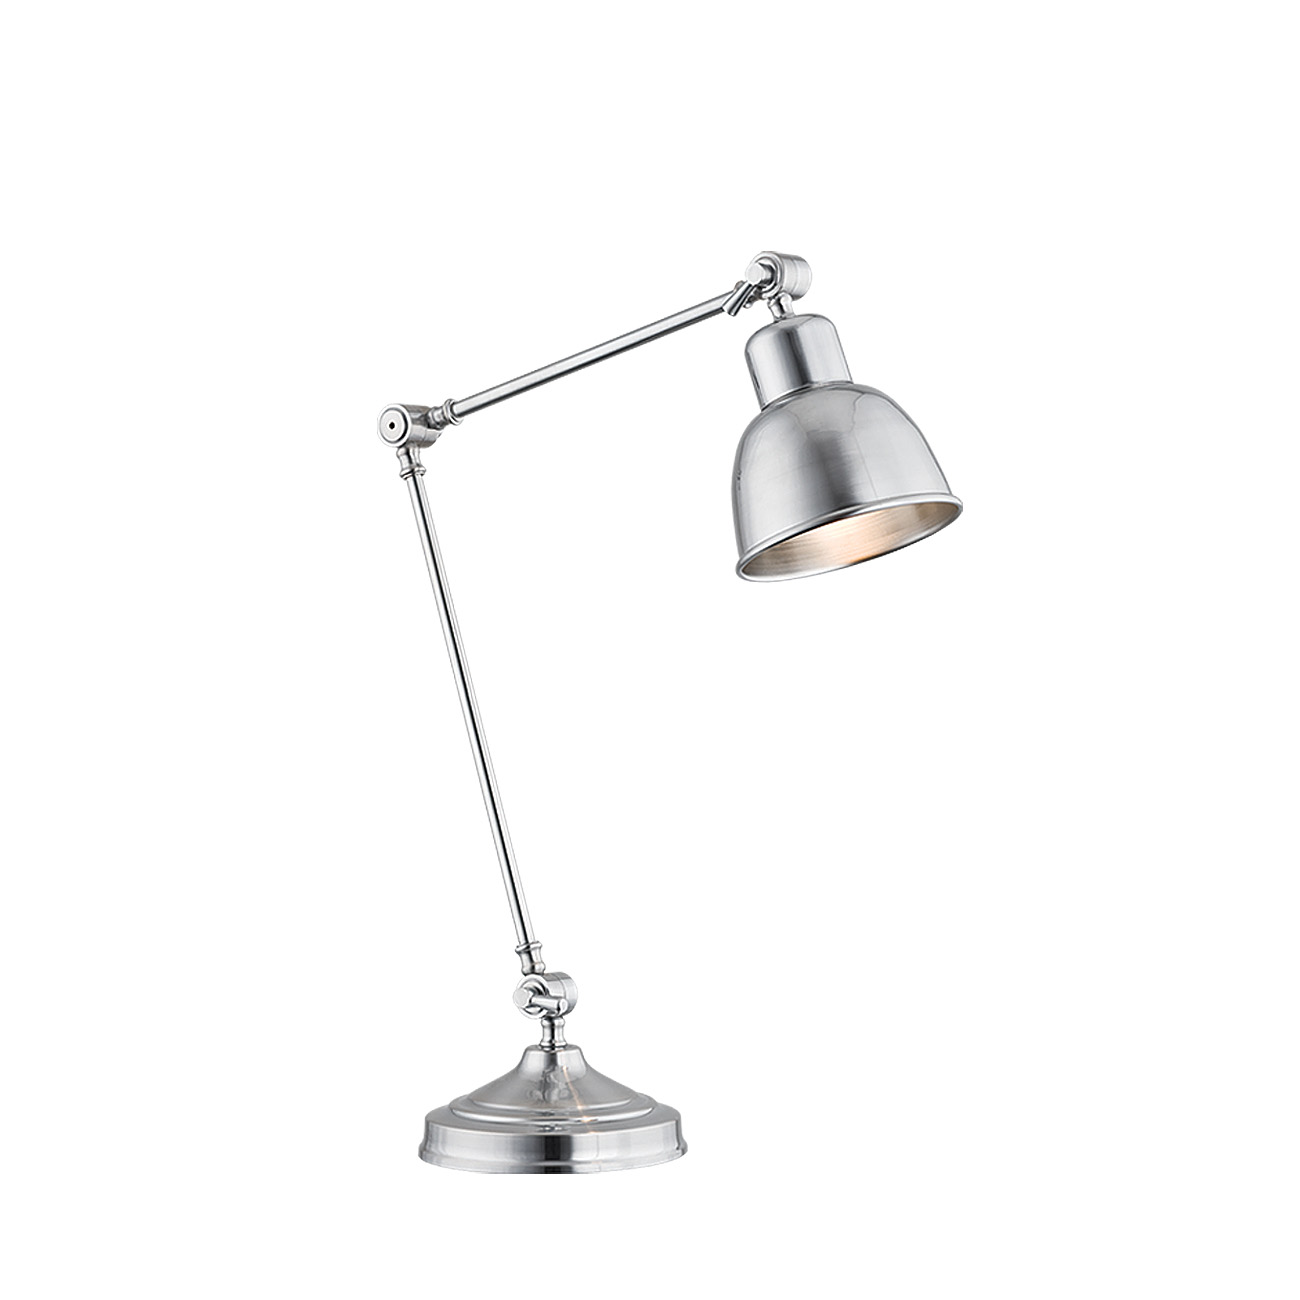 Lampa biurkowa EUFRAT metalowa chrom szczotkowany regulowana 45 cm